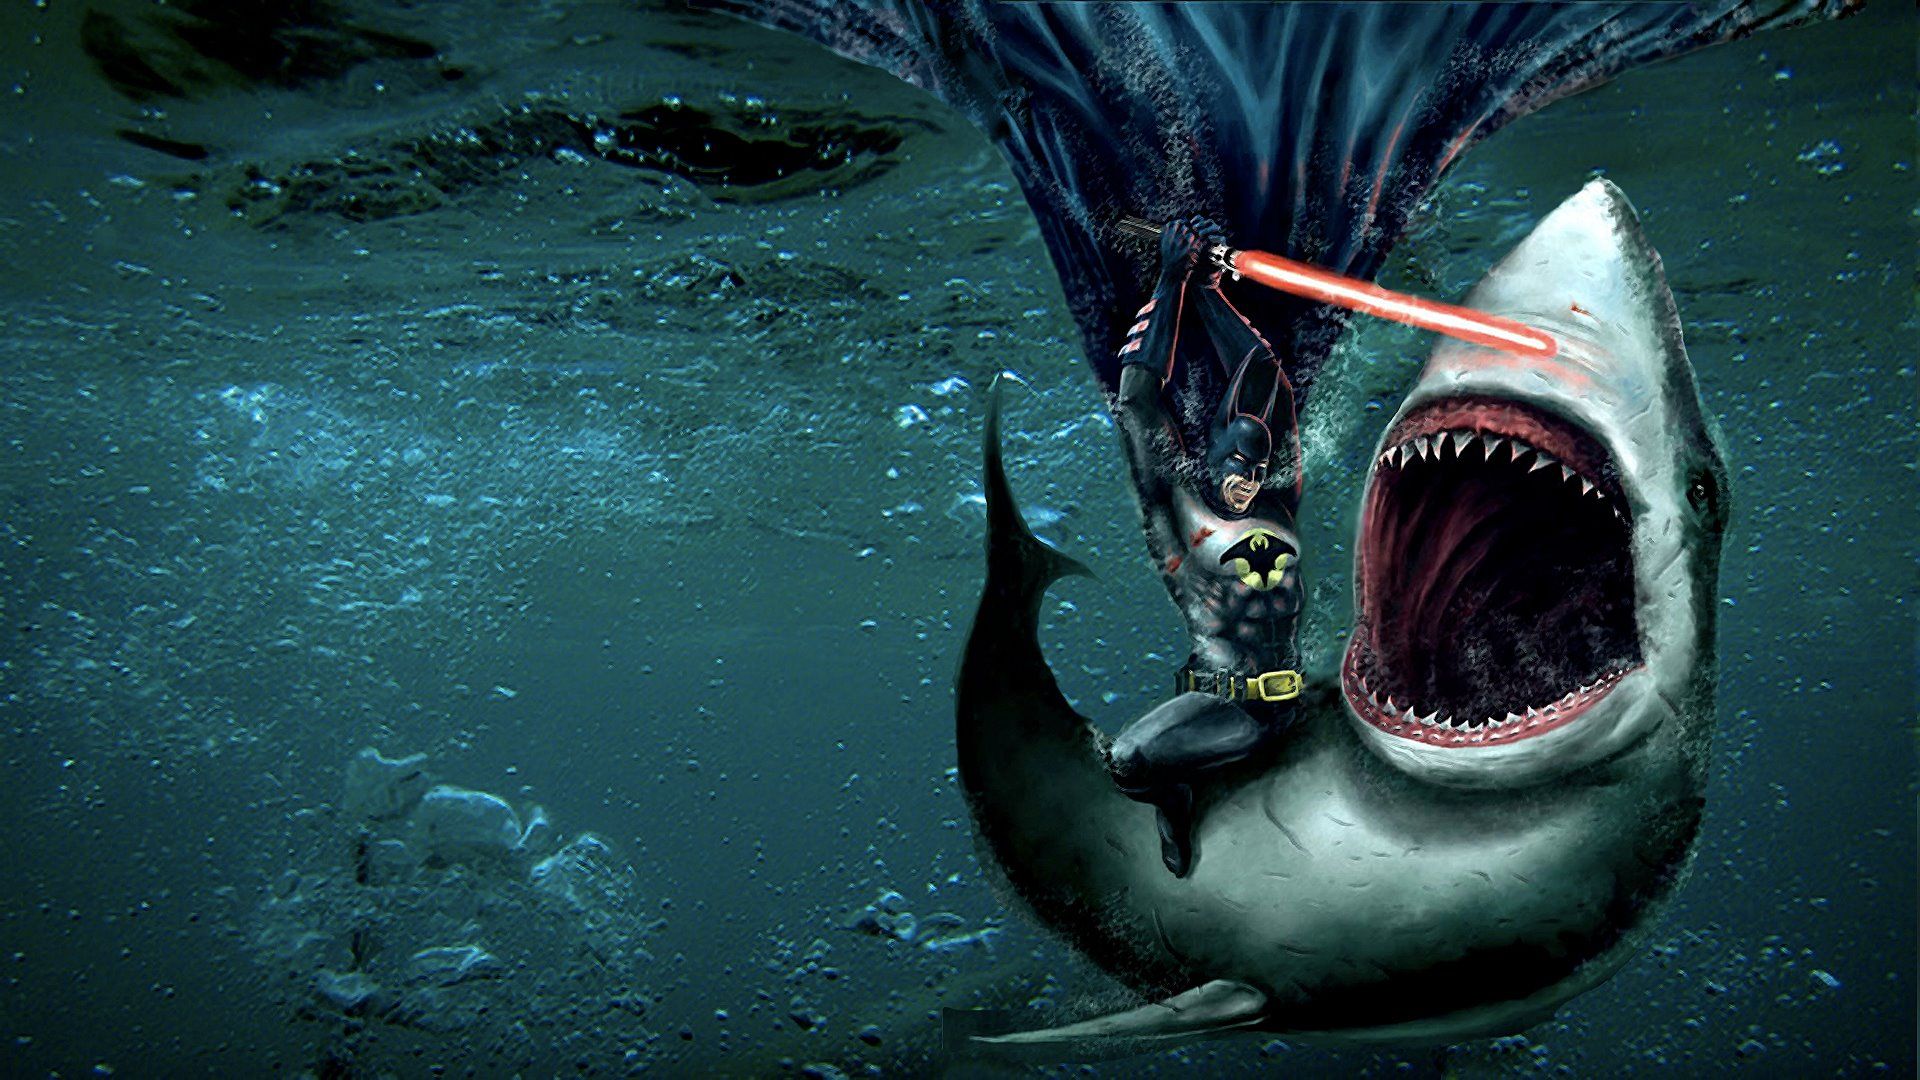 Batman vs great white shark plus light saber. Batman wallpaper, Shark, HD wallpaper 1080p